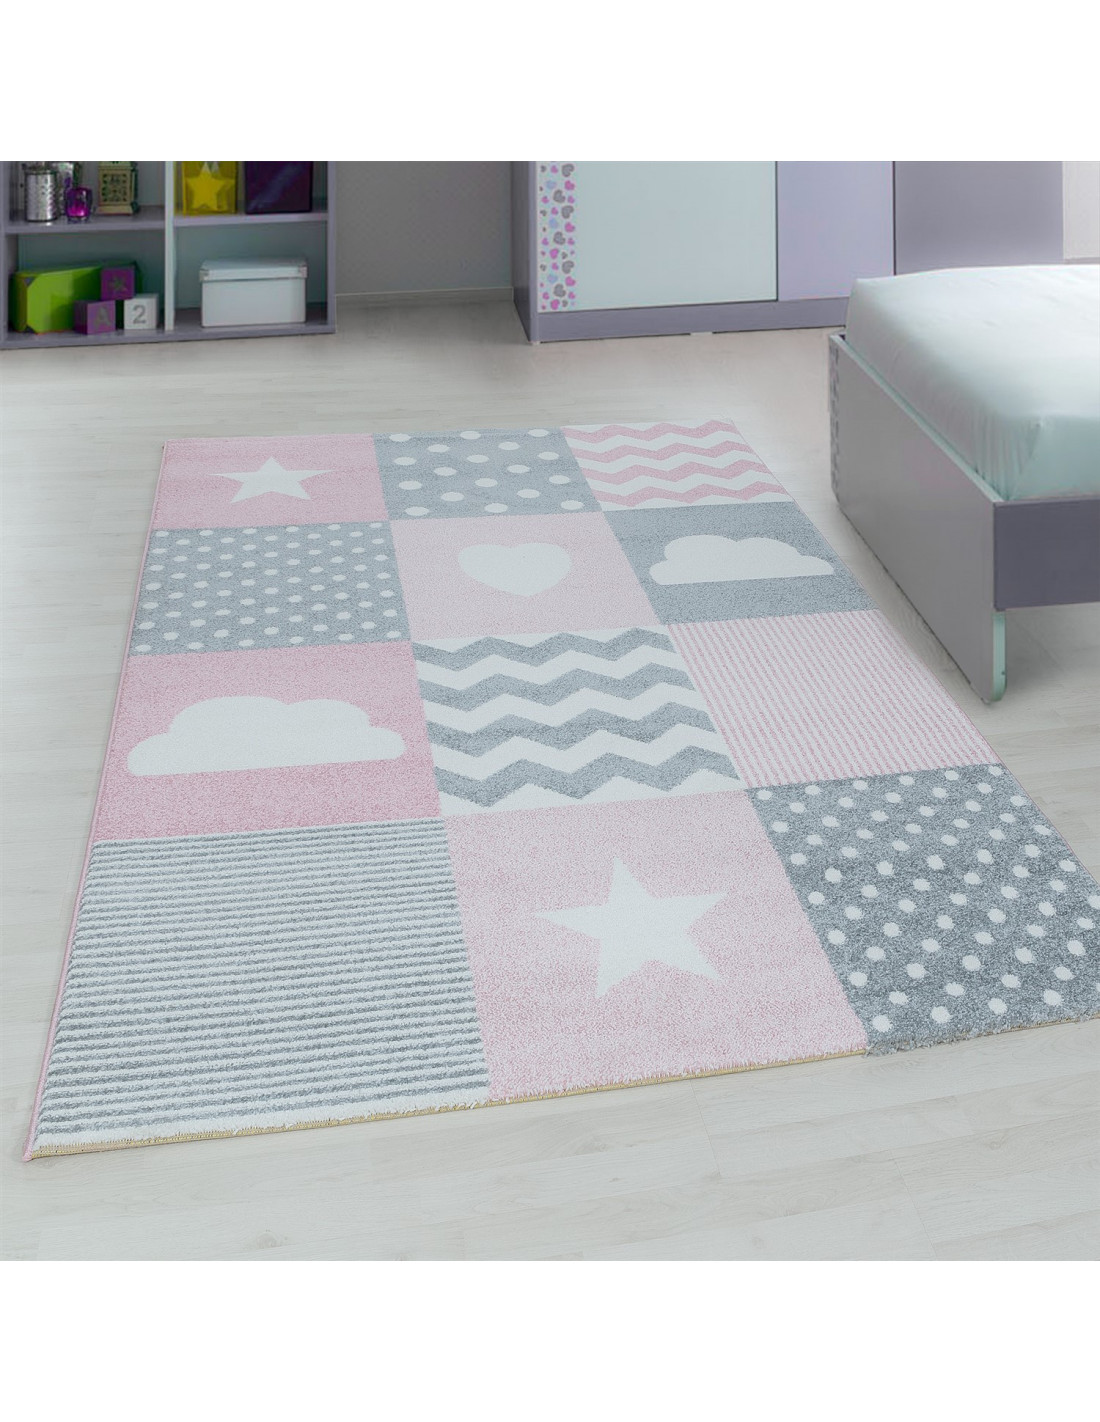 Designer children's room rug with pink motifs